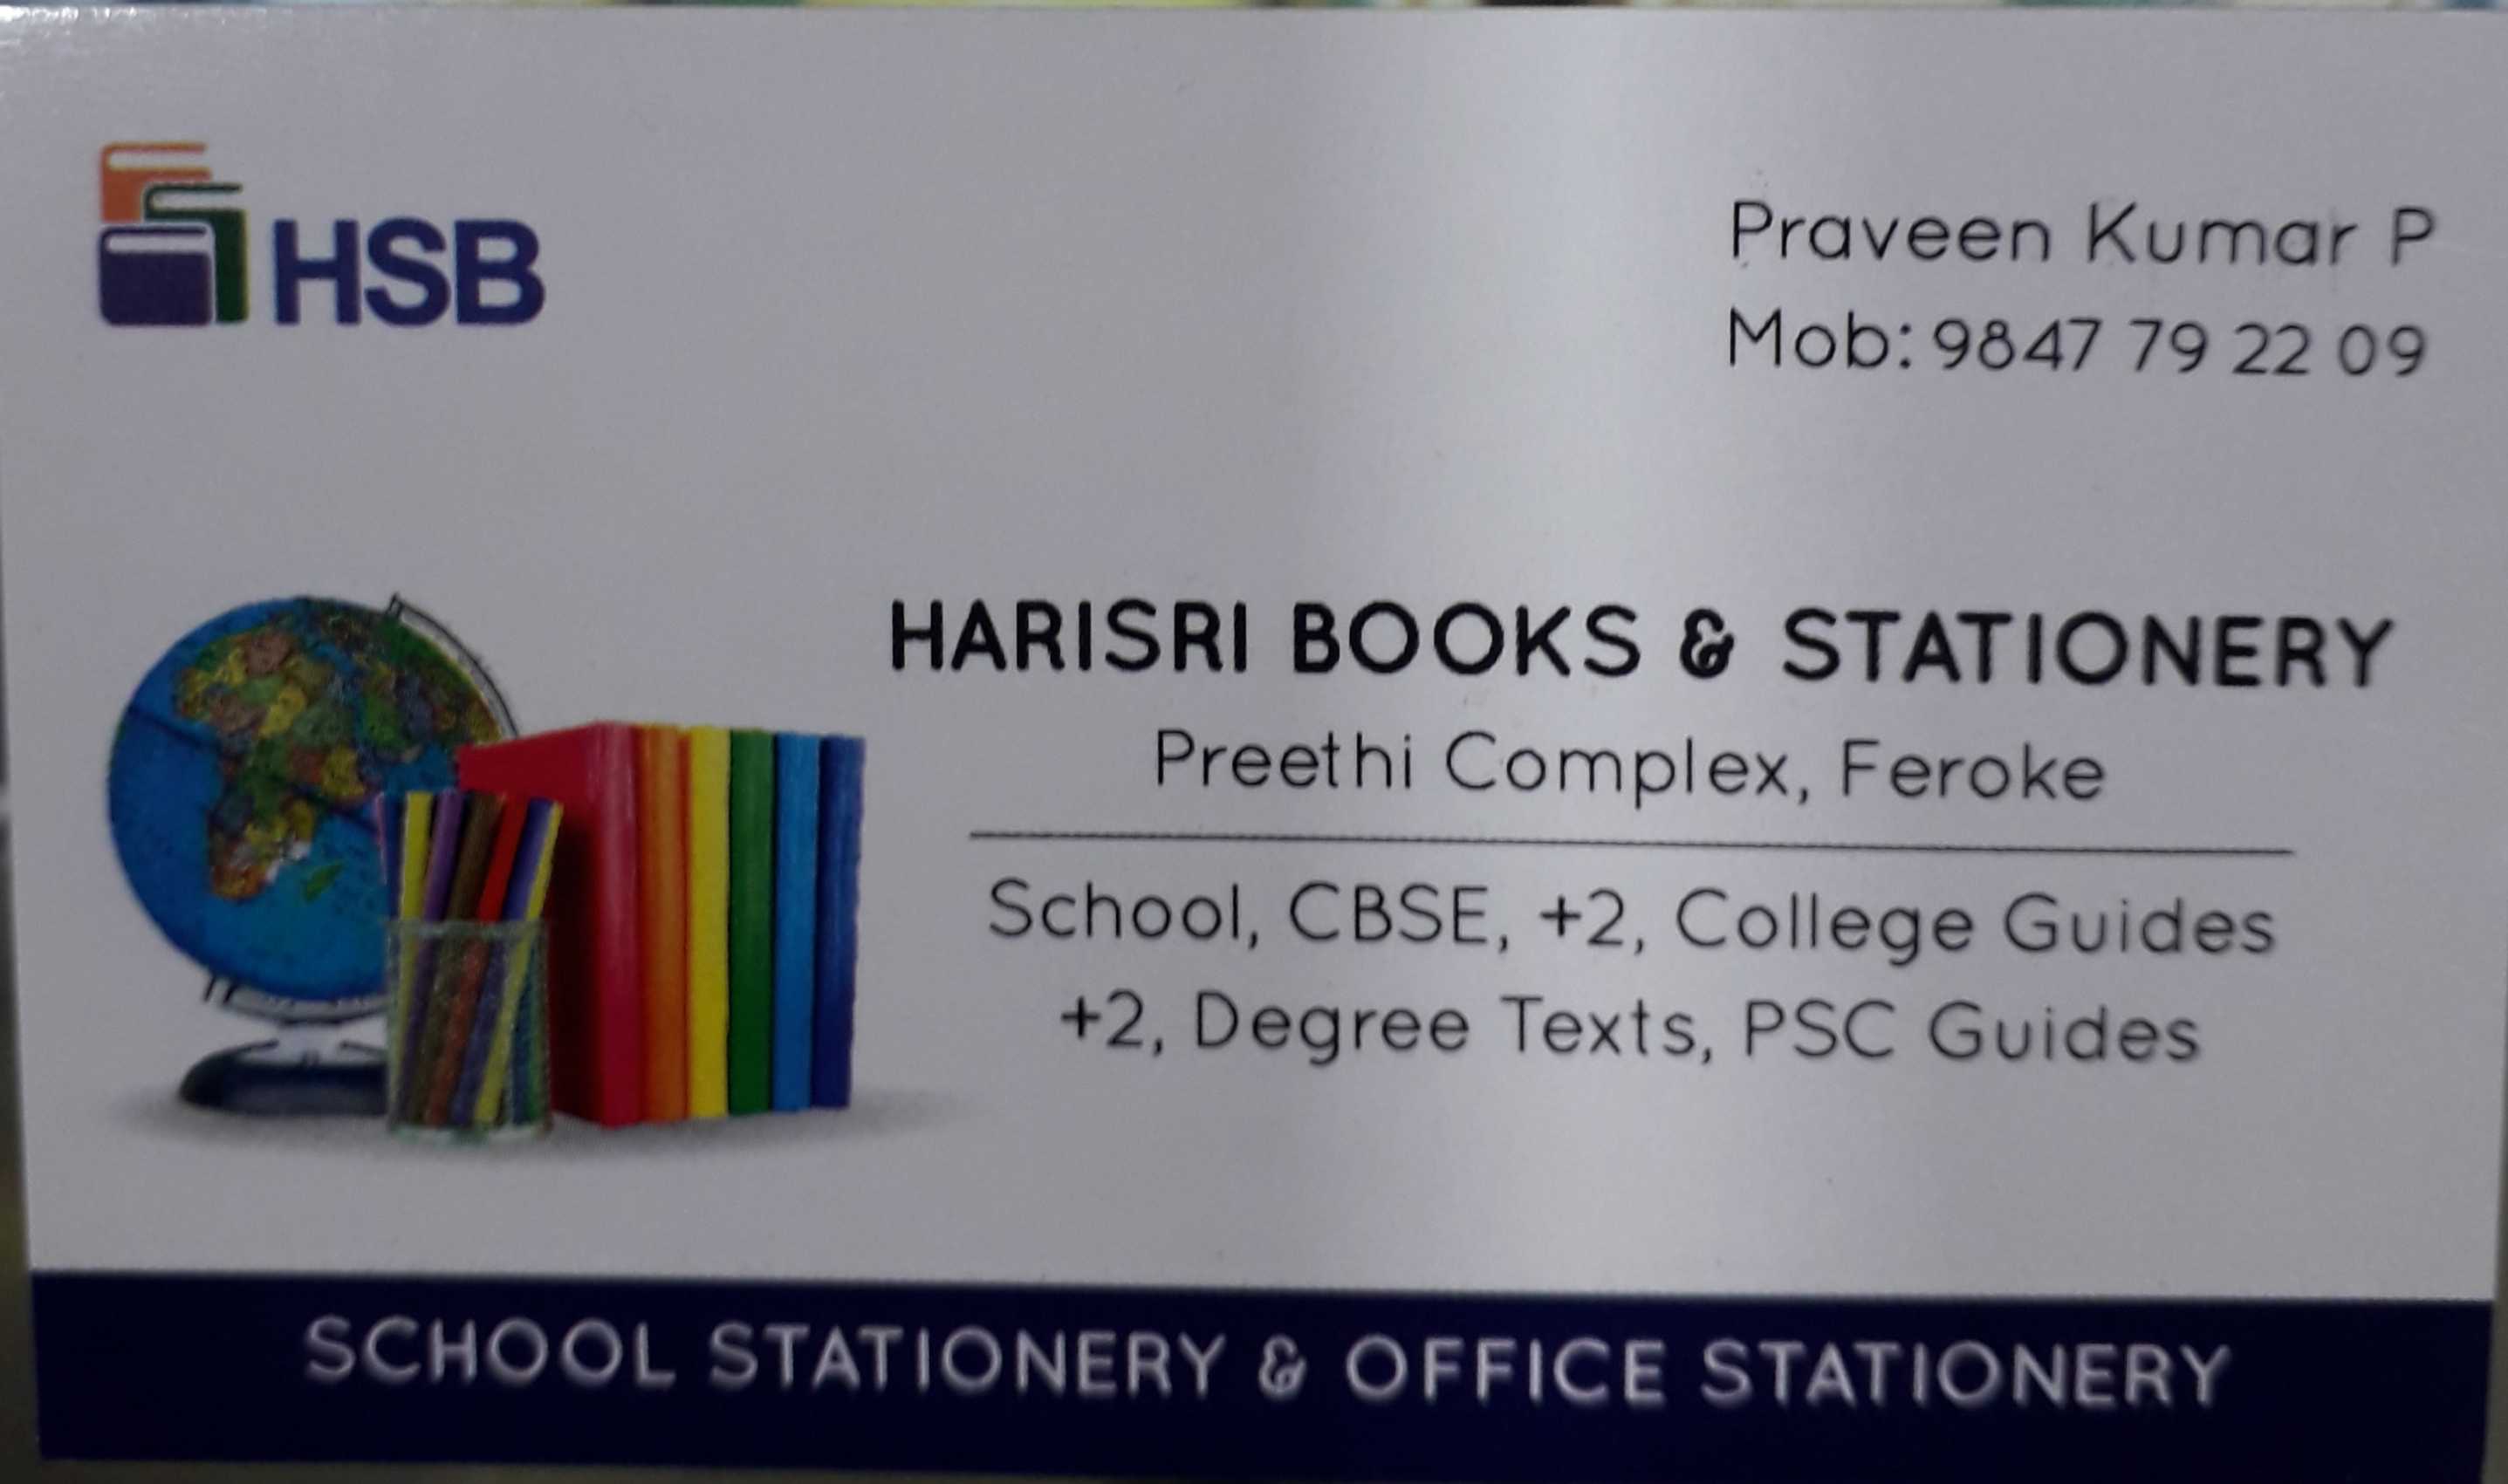 HARISRI BOOKS & STATIONERY, STATIONARY,  service in Farooke, Kozhikode